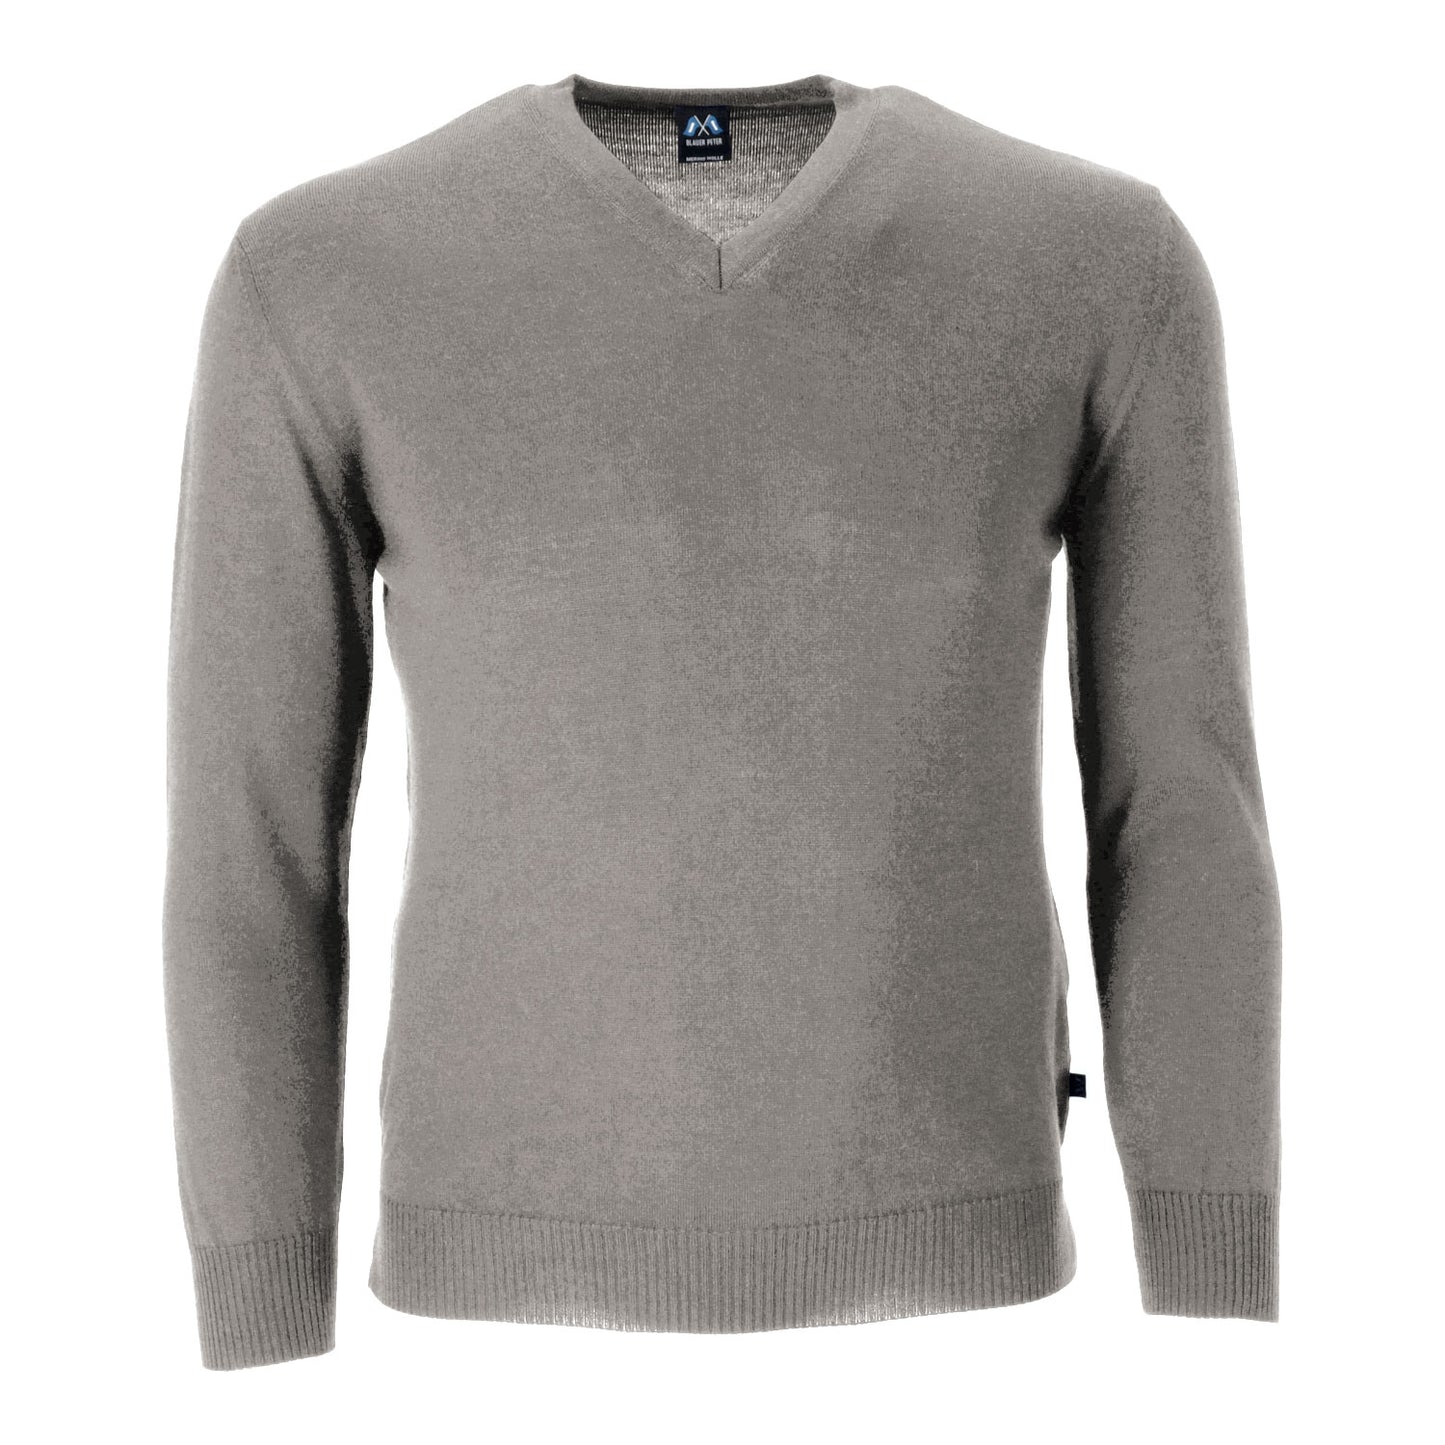 Merino V sweater